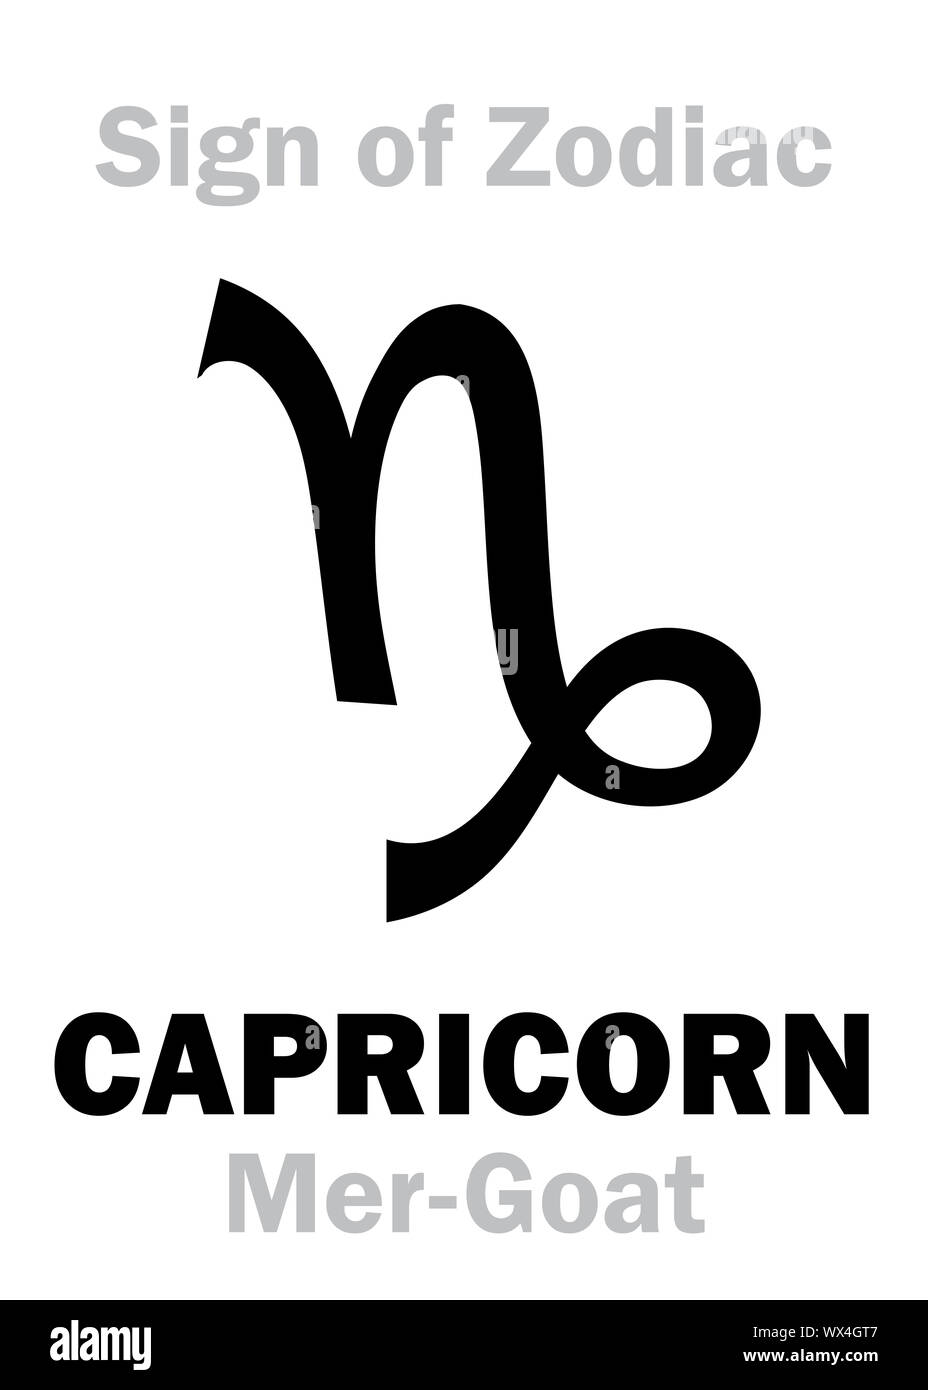 Astrology: Sign of Zodiac CAPRICORNUS (The Mer-Goat) Stock Photo